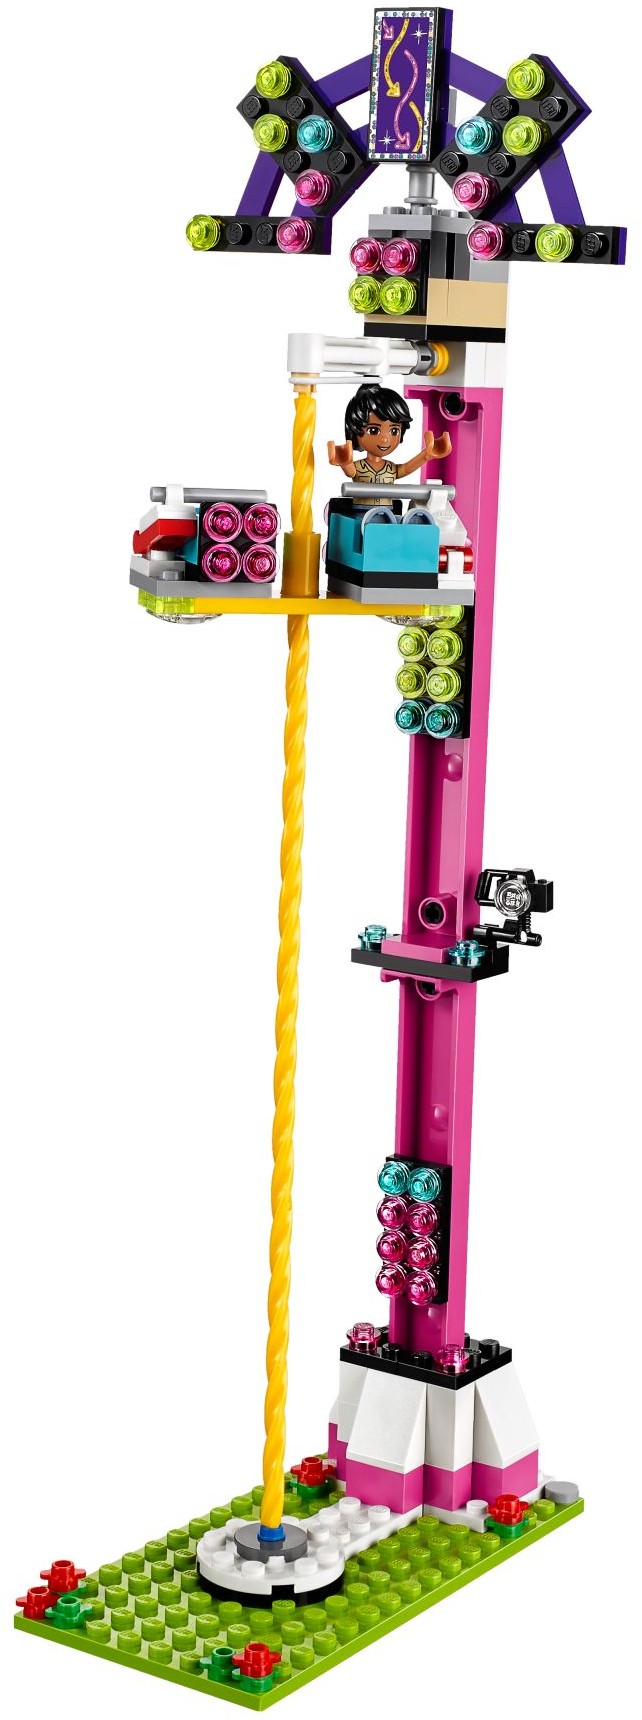 LEGO Friends Amusement Park Roller Coaster Set Revealed ...